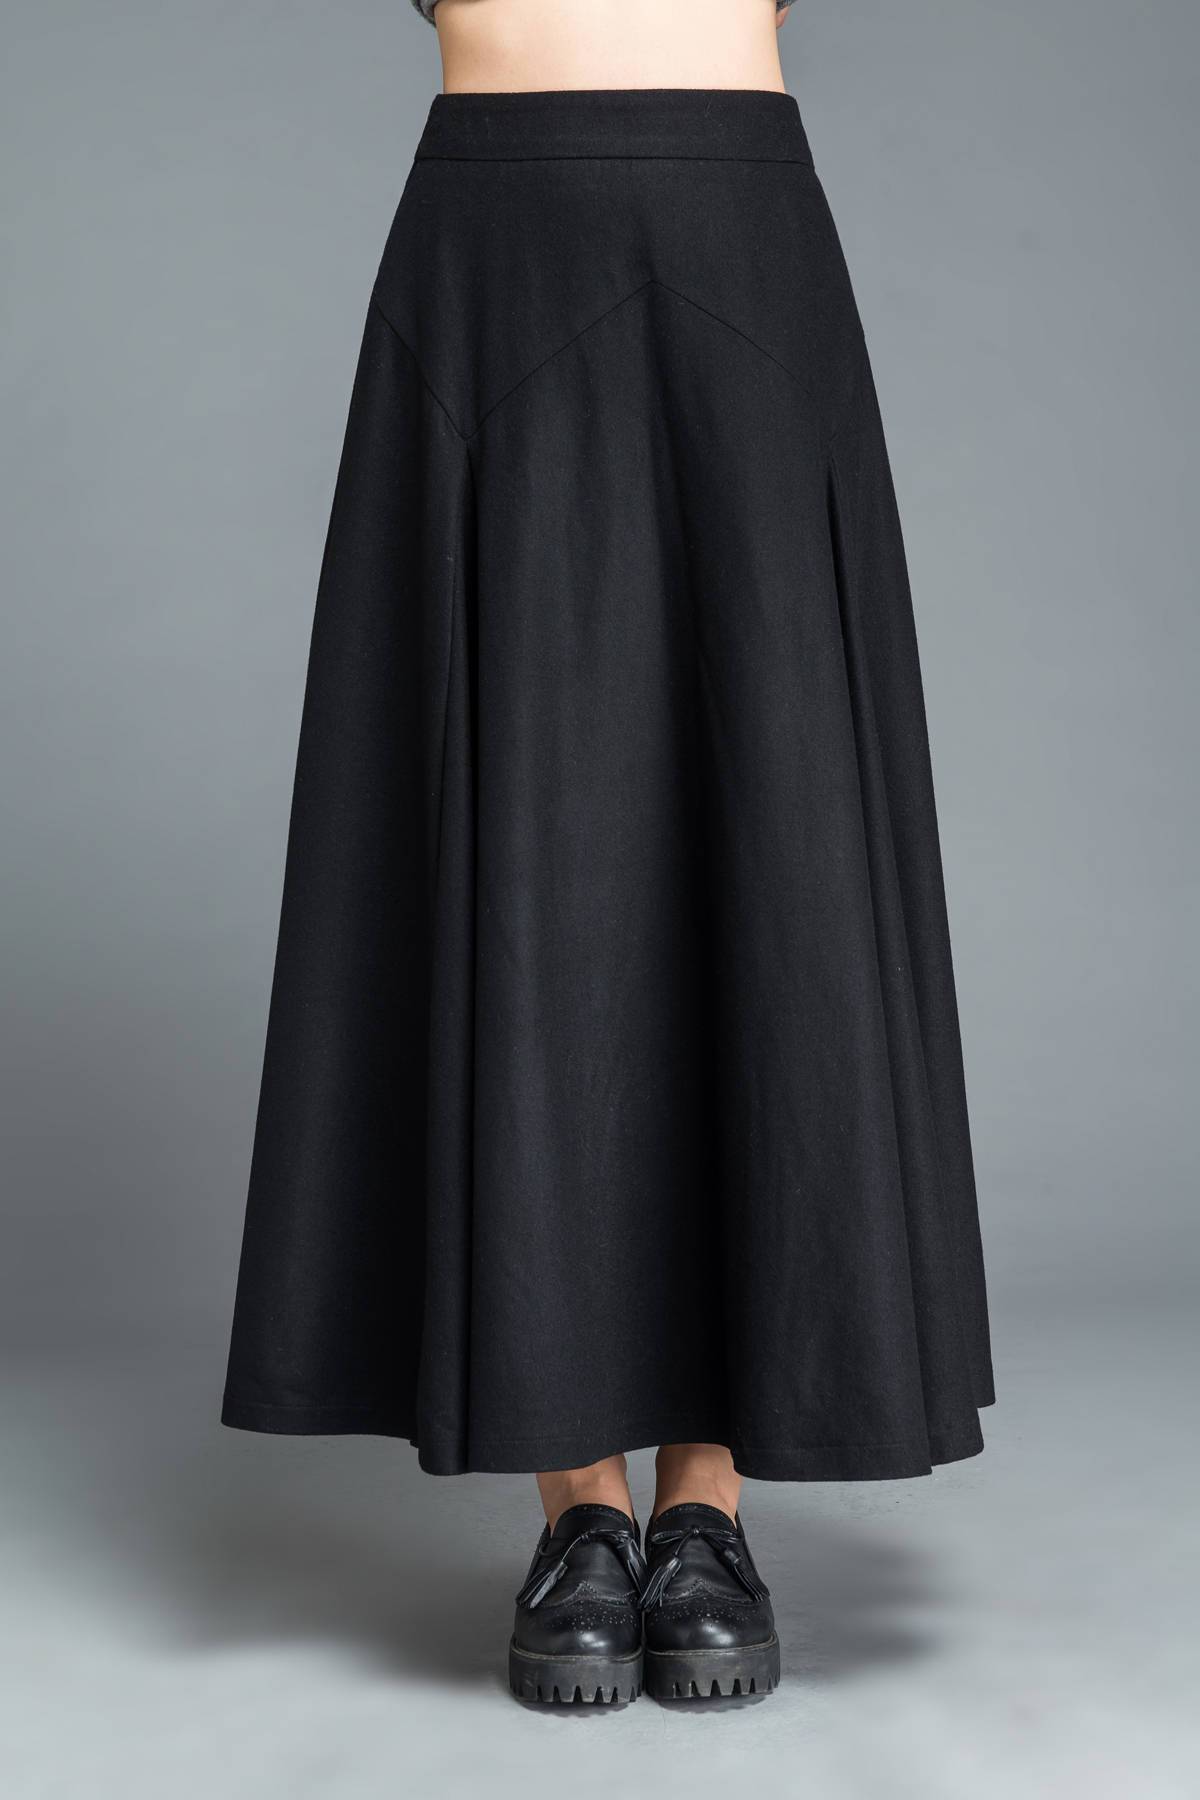  Women's Winter Elegant Warm Long Skirt Wool Maxi